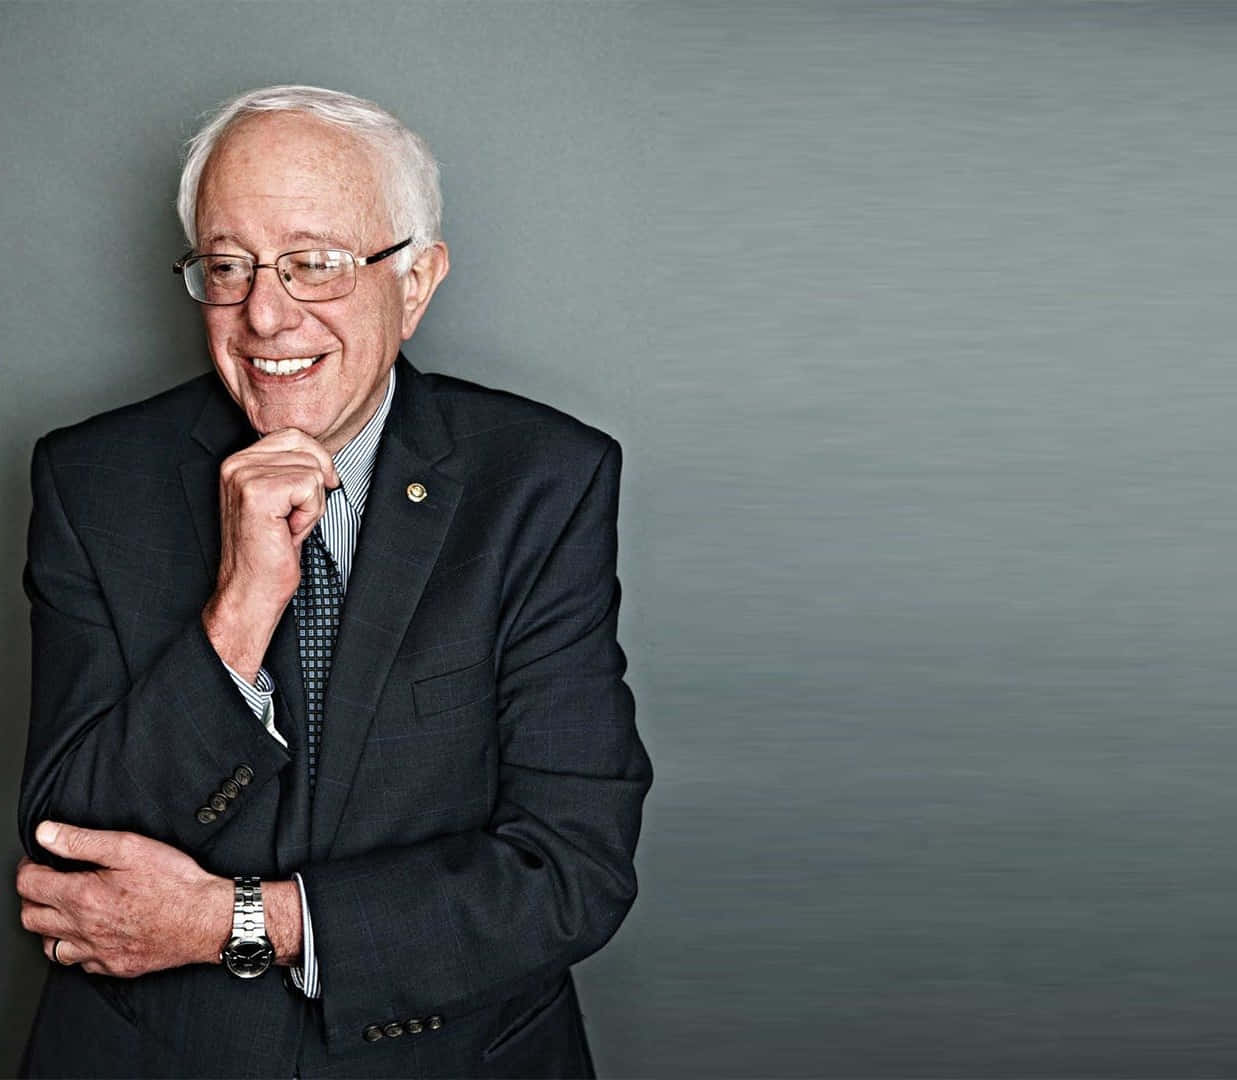 Smiling Politician Bernie Sanders Portrait Wallpaper